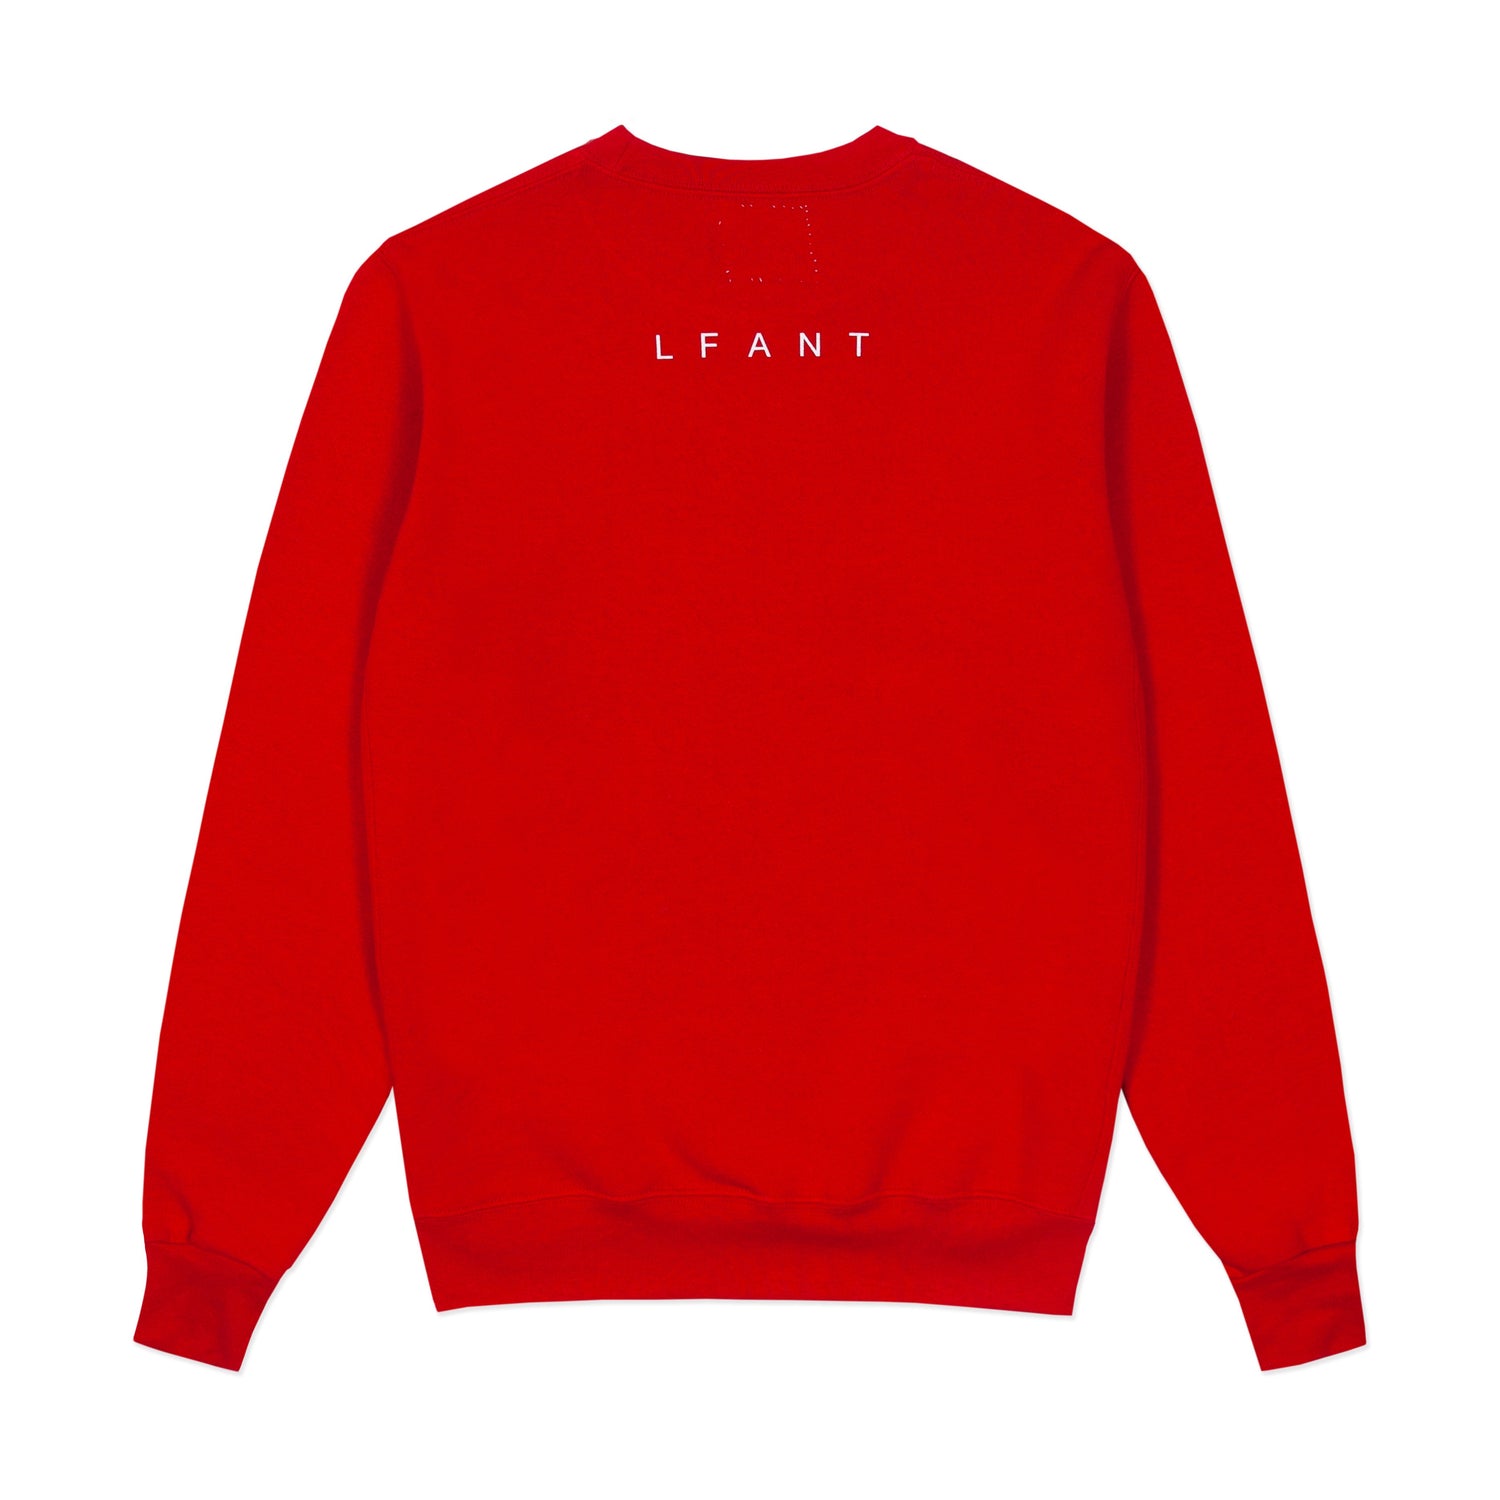 Red crewneck sweatshirt with "LFANT" on the back.